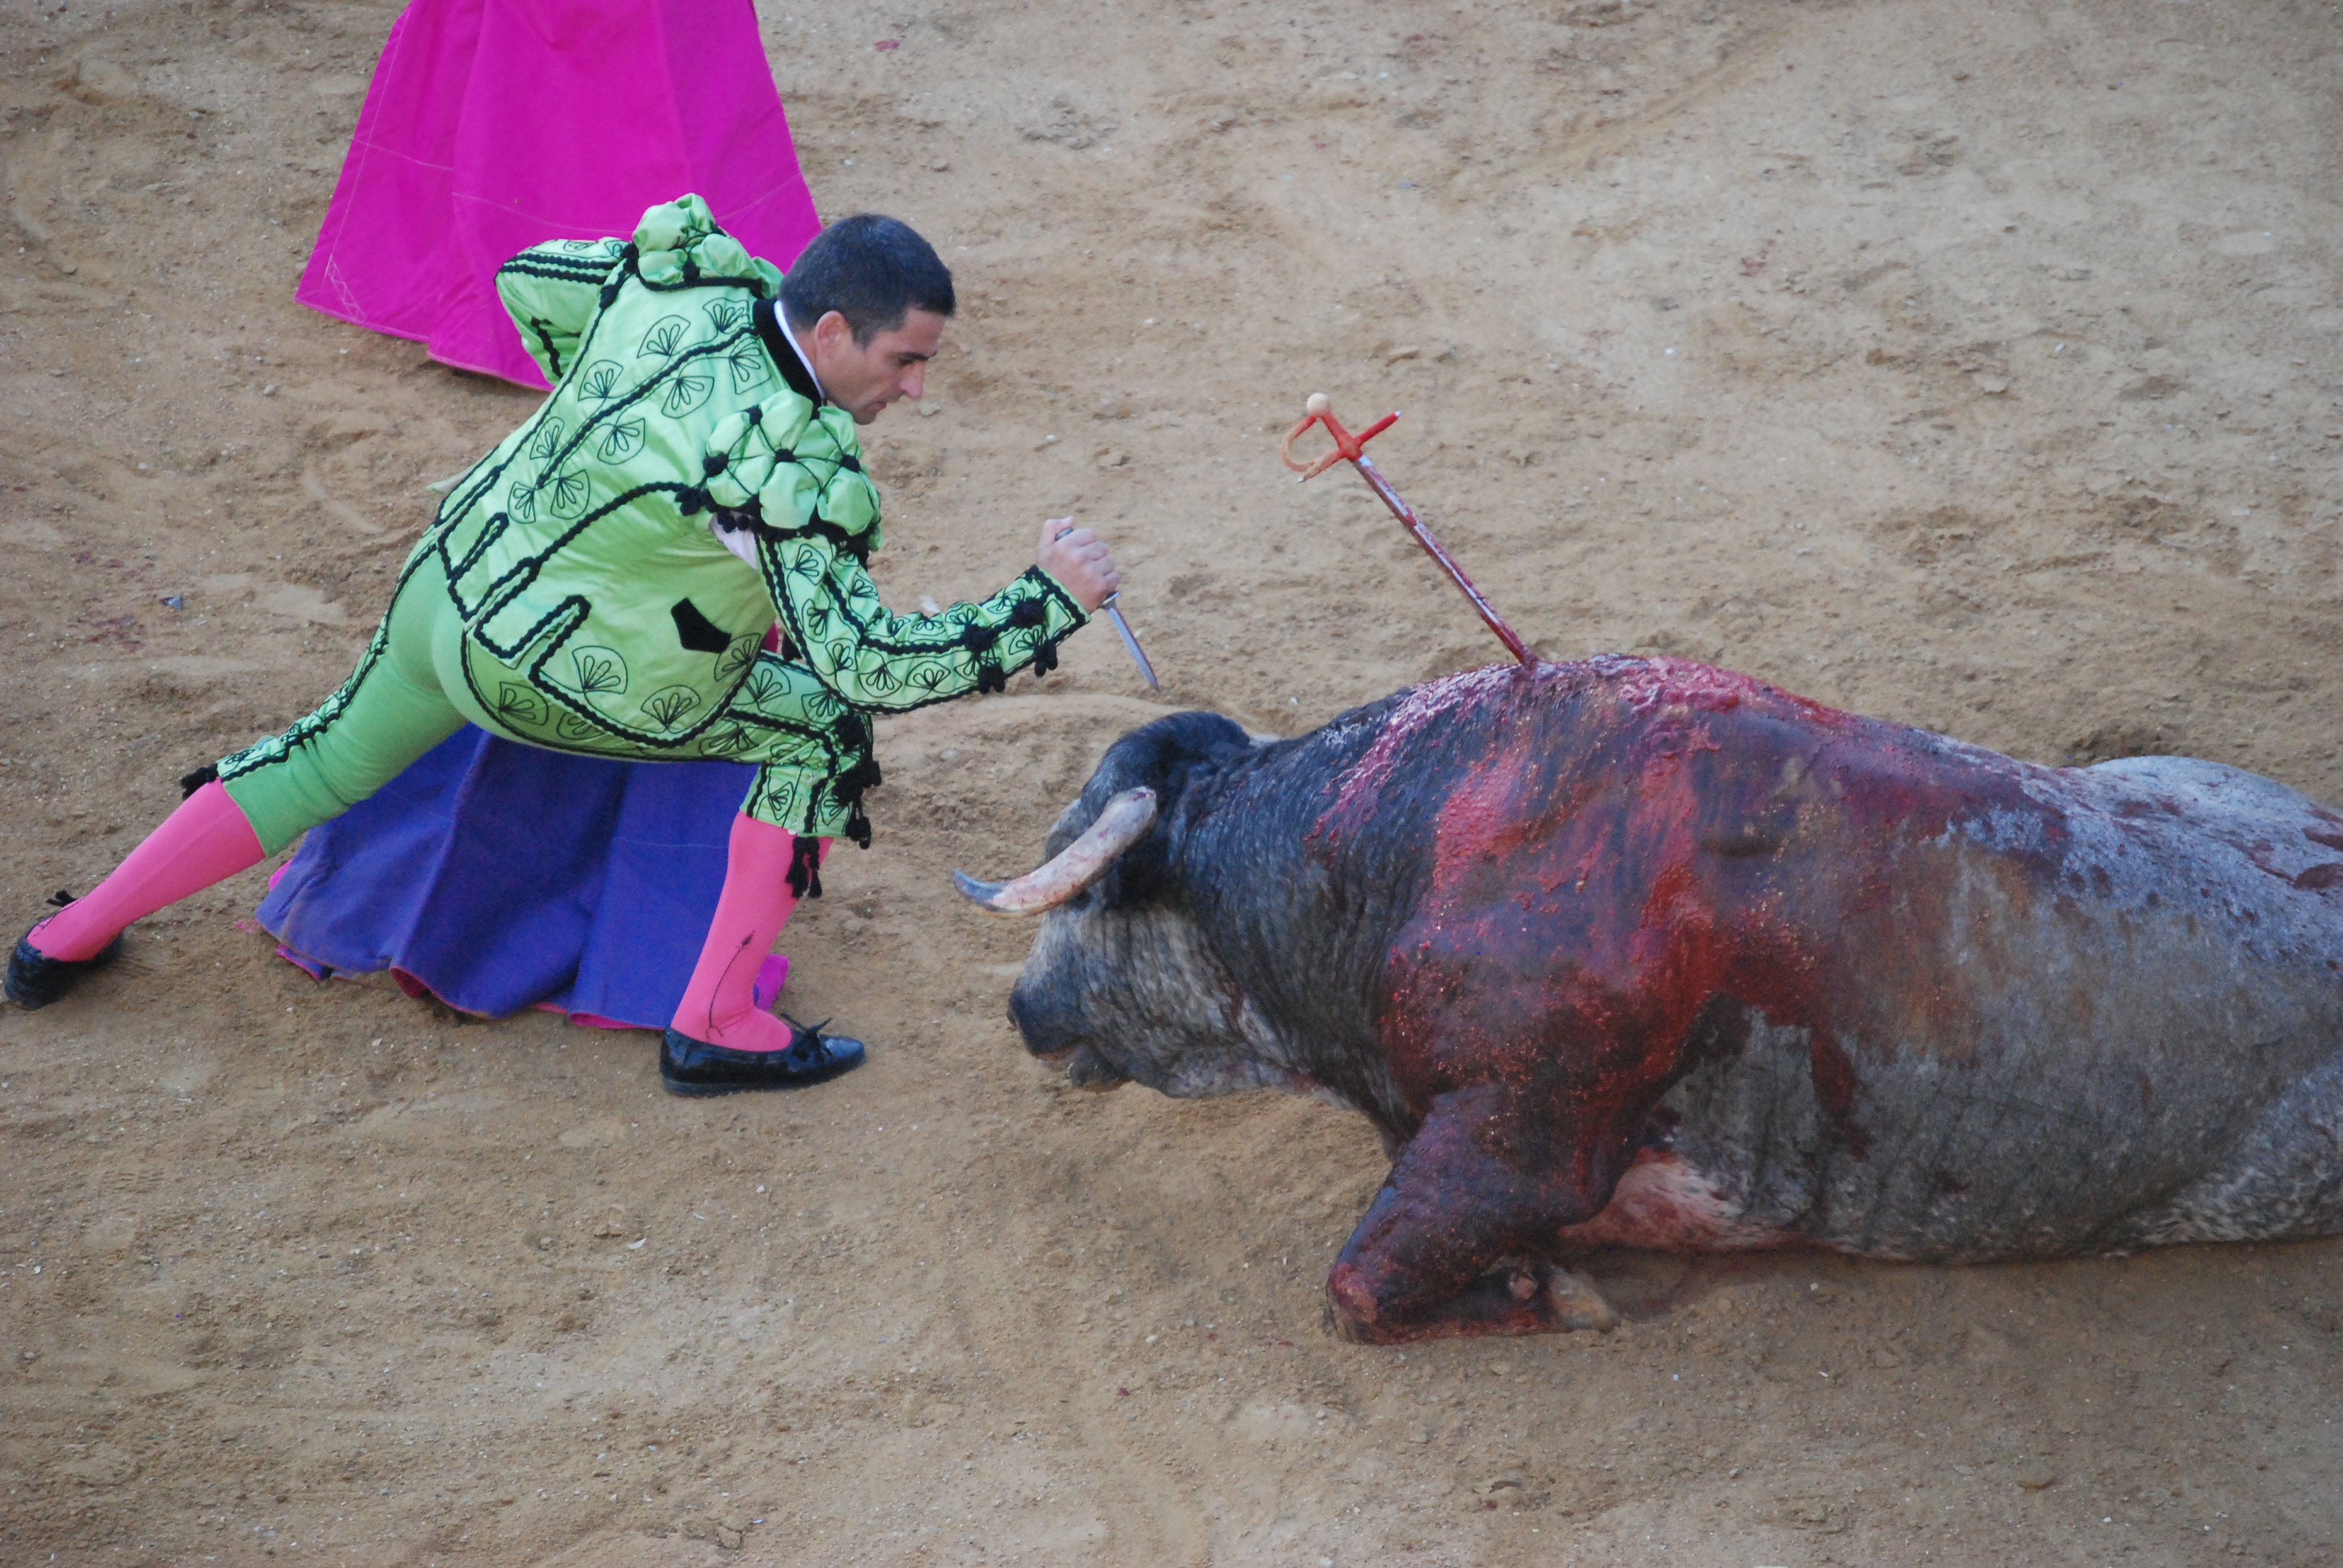 Mexico City moves to ban bullfighting · A Humane World